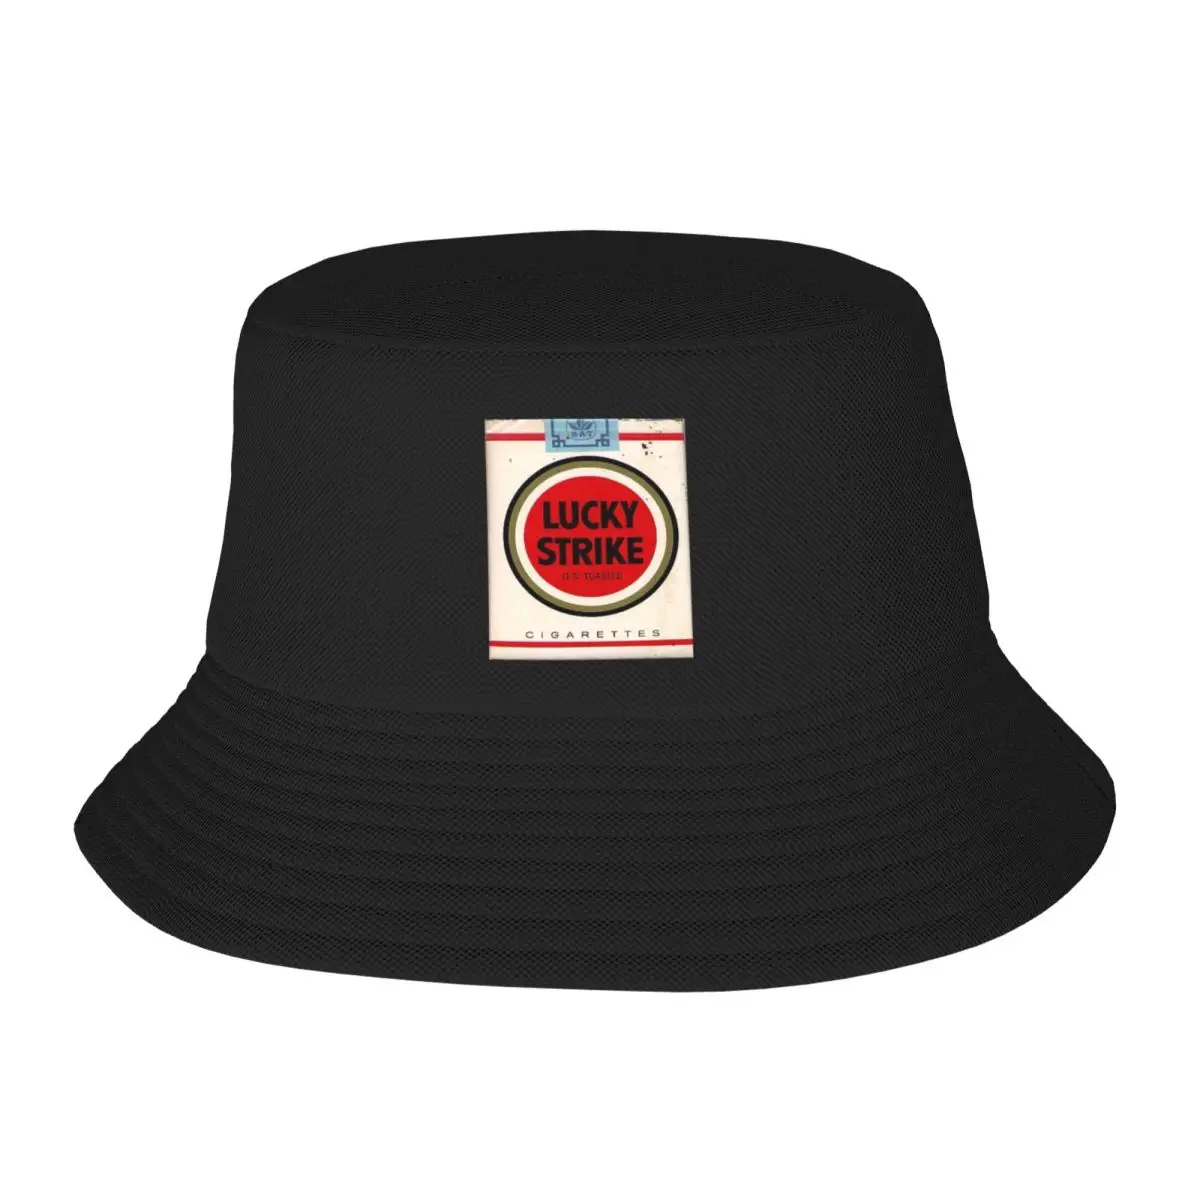 

New BEST SELLER Lucky Strike Merchandise Essential T-Shirt Bucket Hat Hood Anime Golf Wear Beach Outing Caps Male Women's